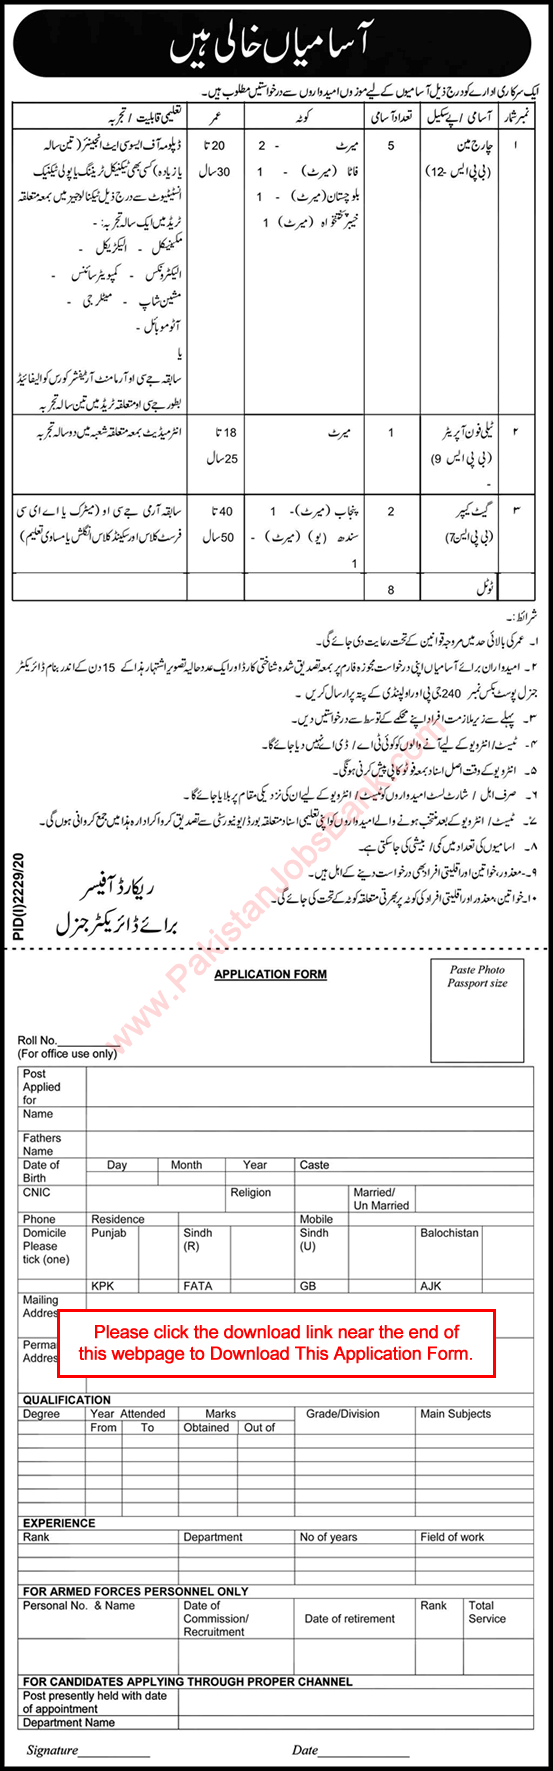 PO Box 240 GPO Rawalpindi Jobs October 2020 Application Form Public Sector Organization Latest